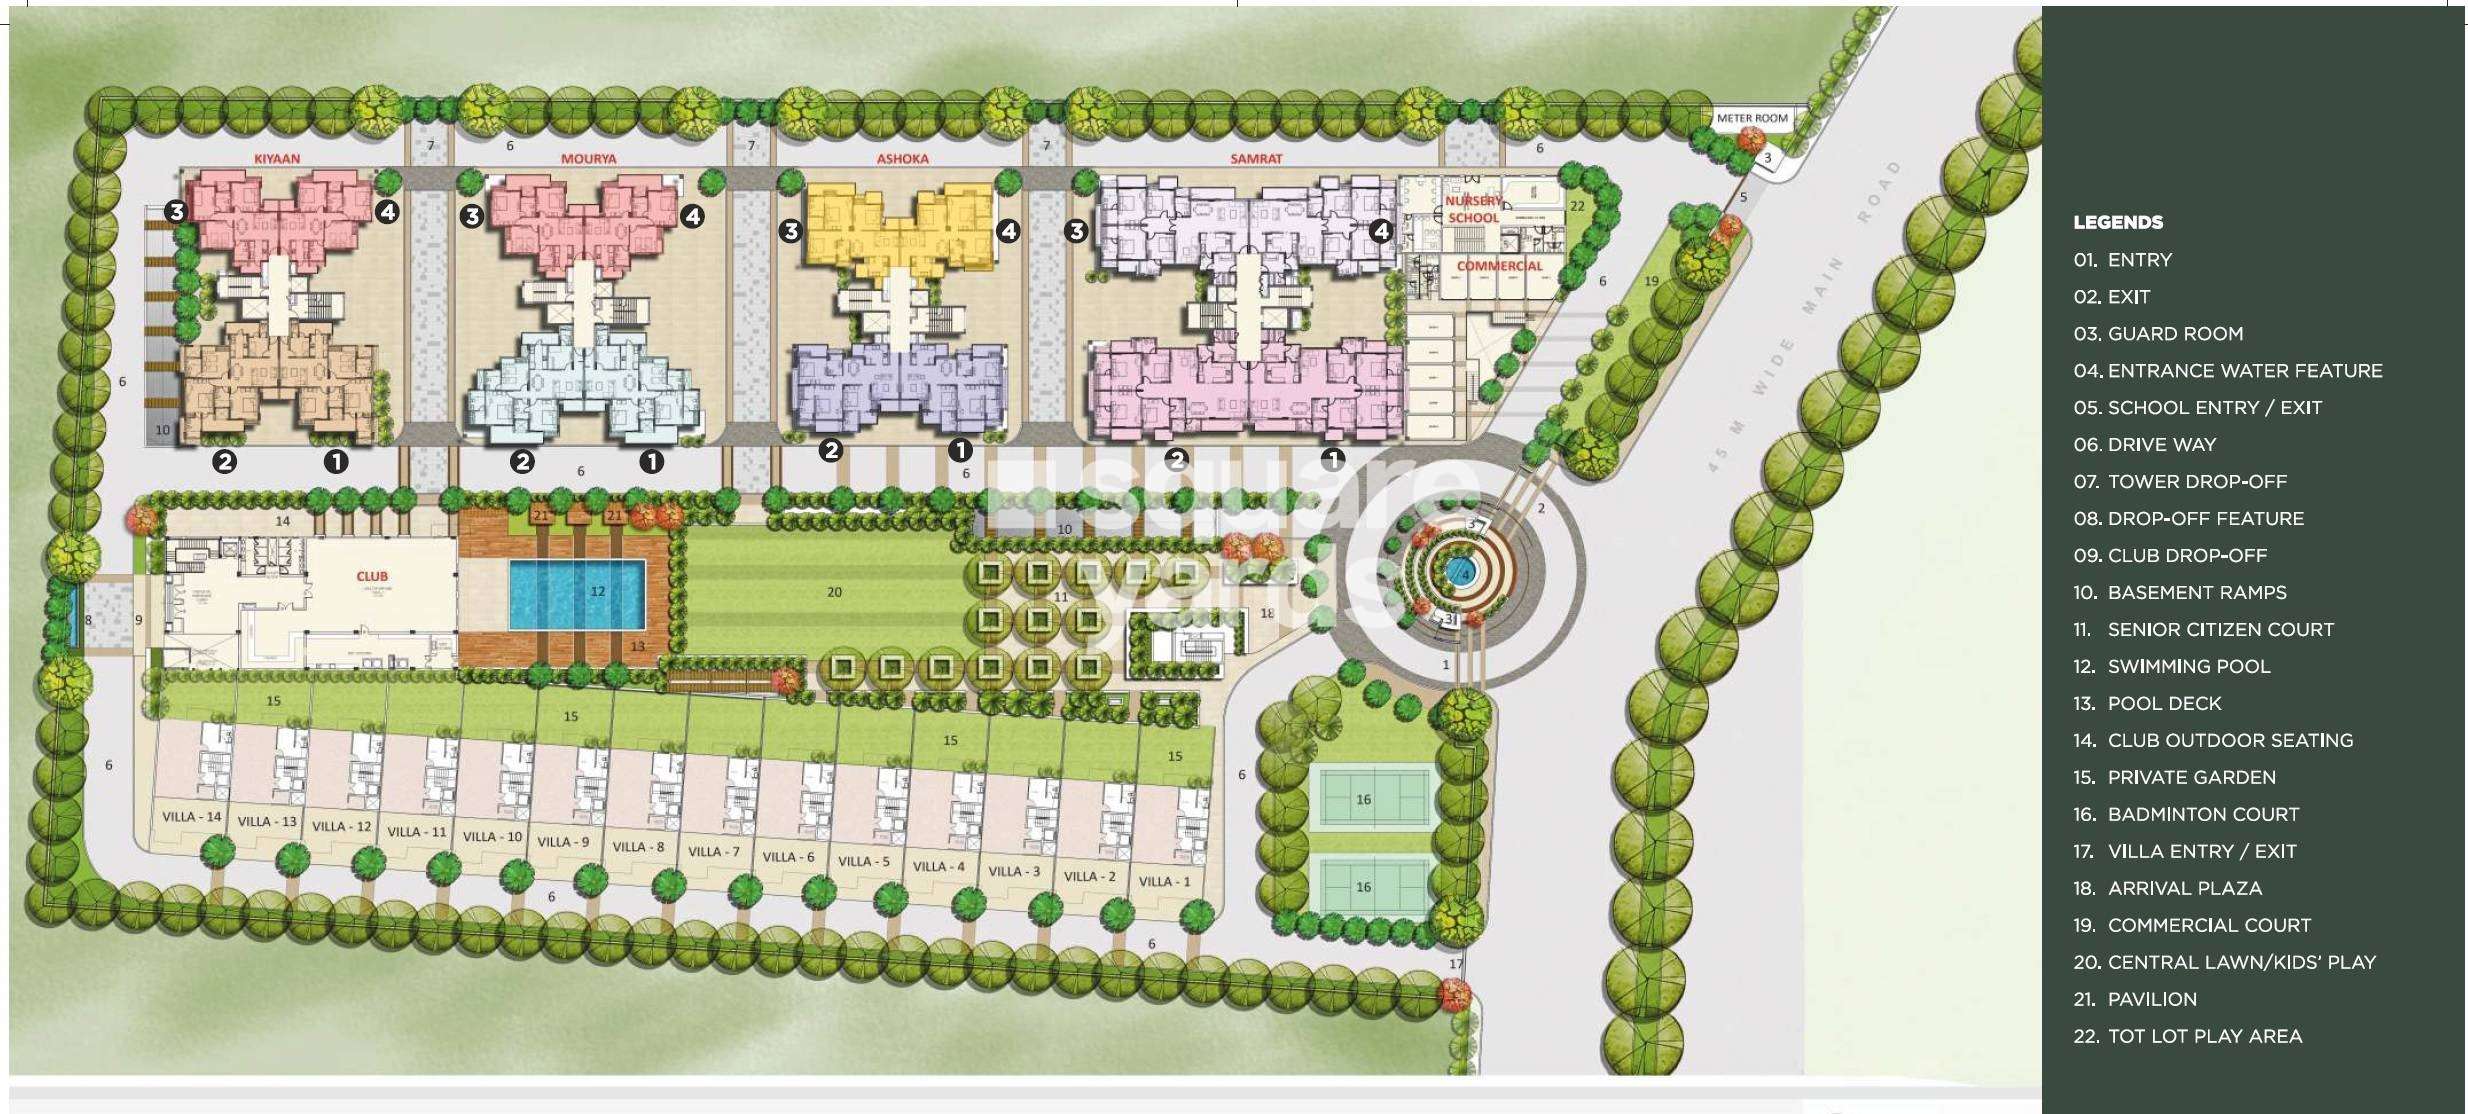 sikka kimaantra greens project master plan image1 8155